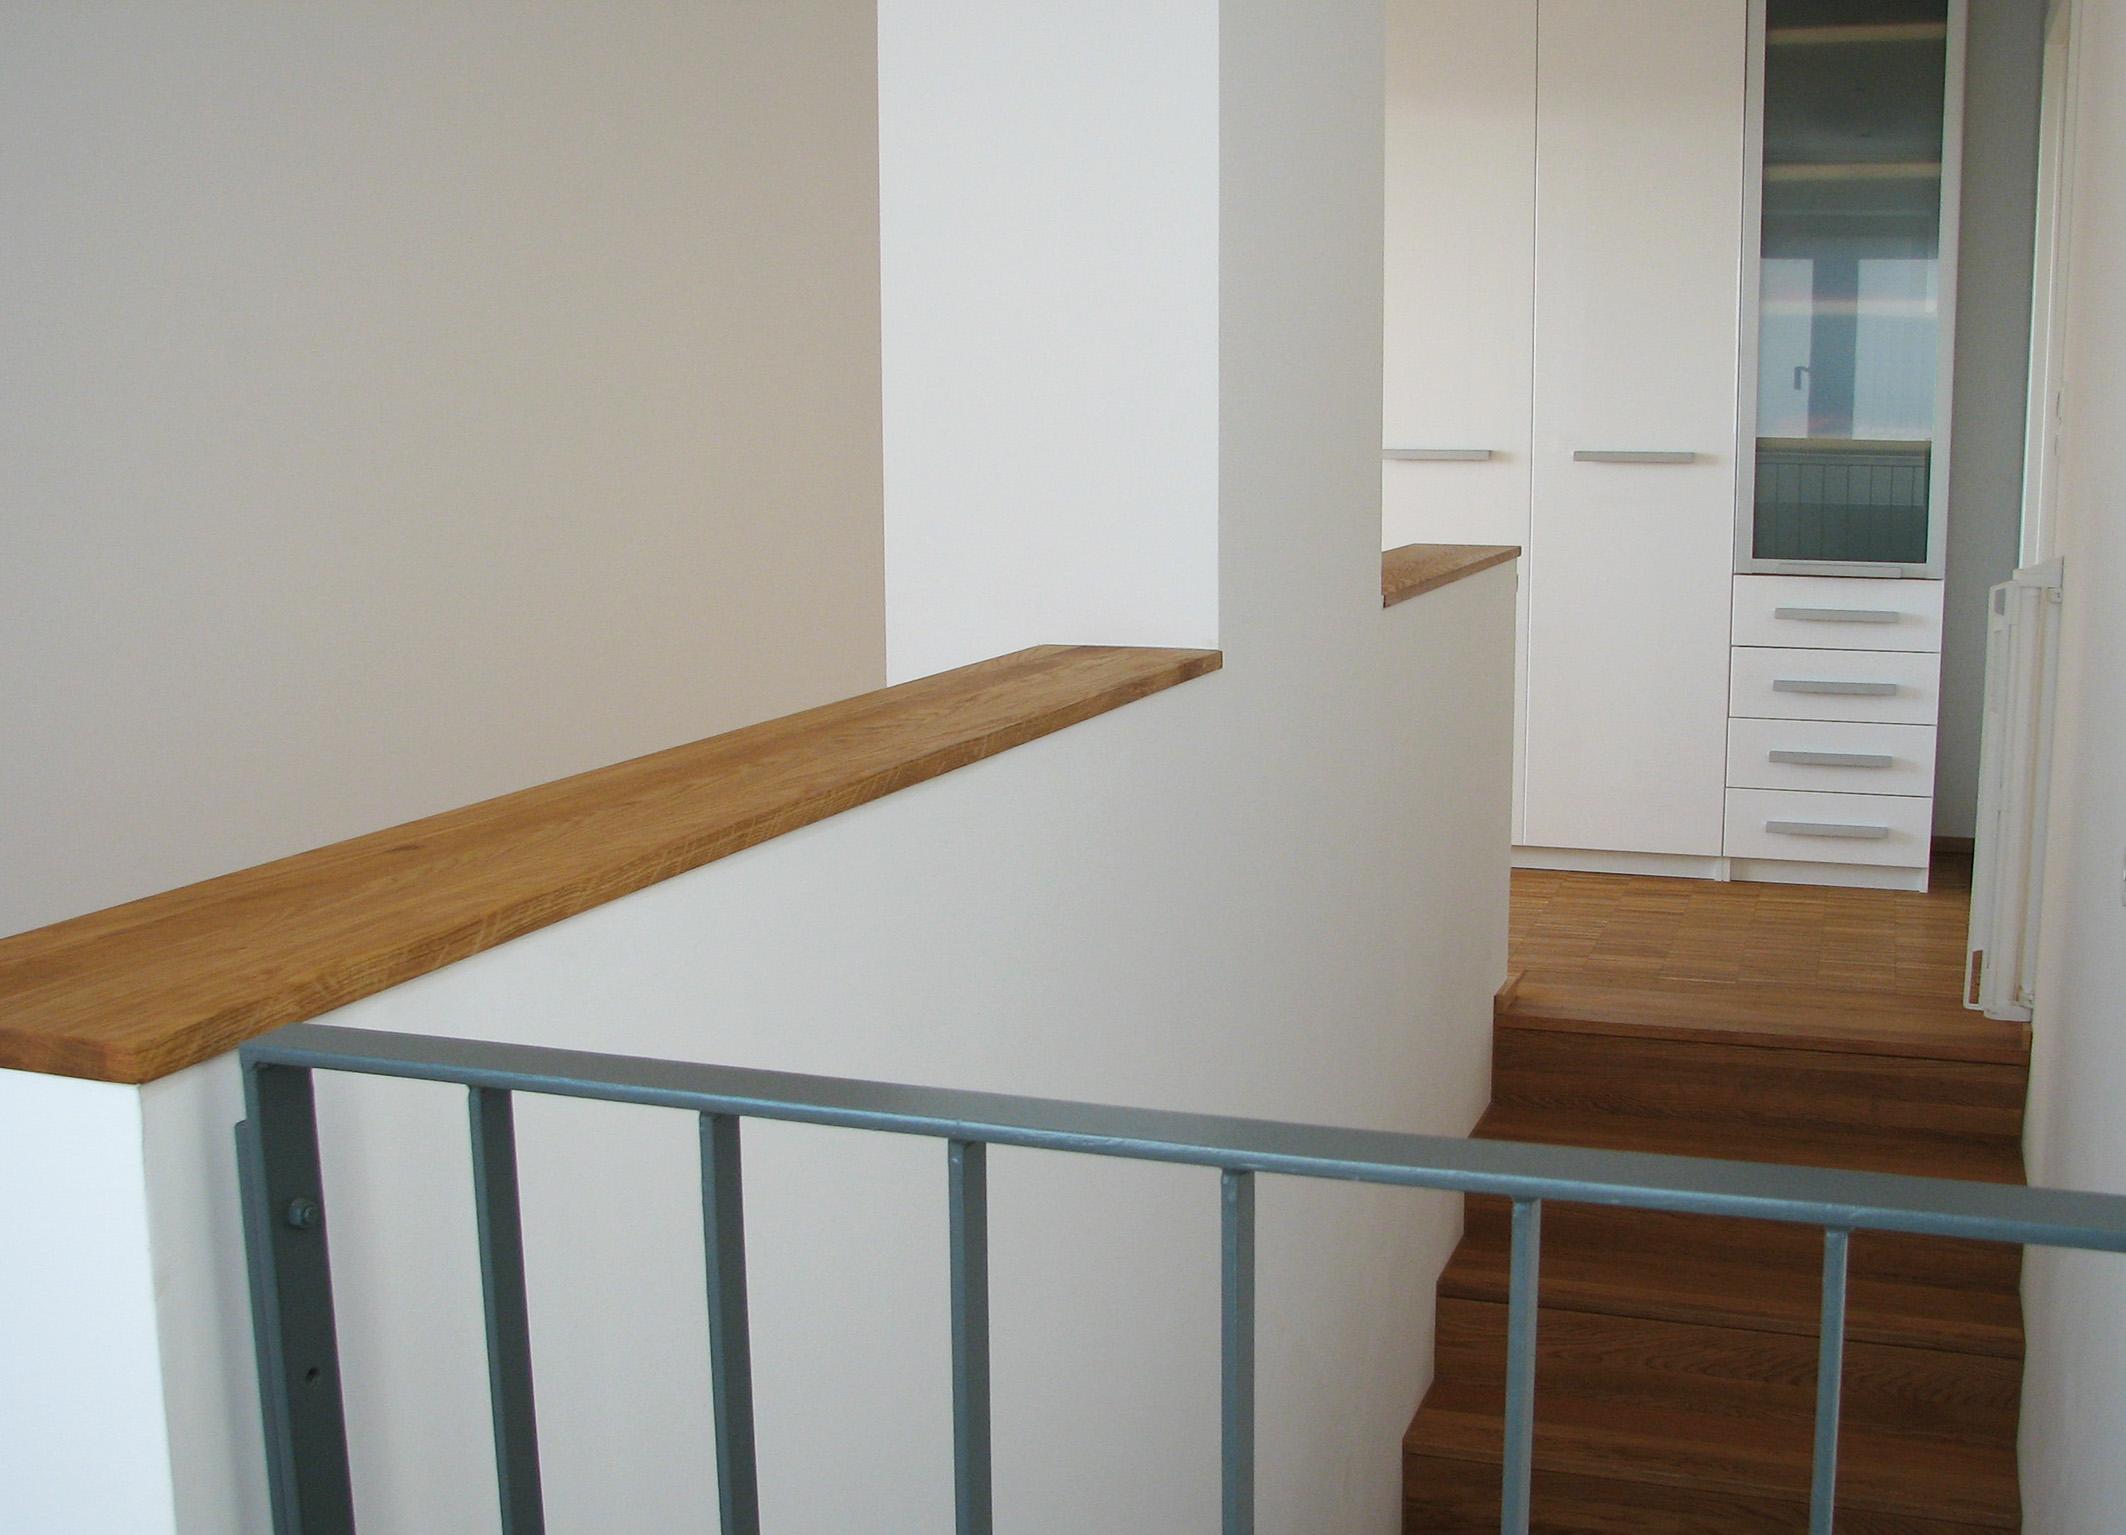 Zentrale Holztreppe ins Obergeschoss #einbauschrankflur #galerie ©Resonatorcoop